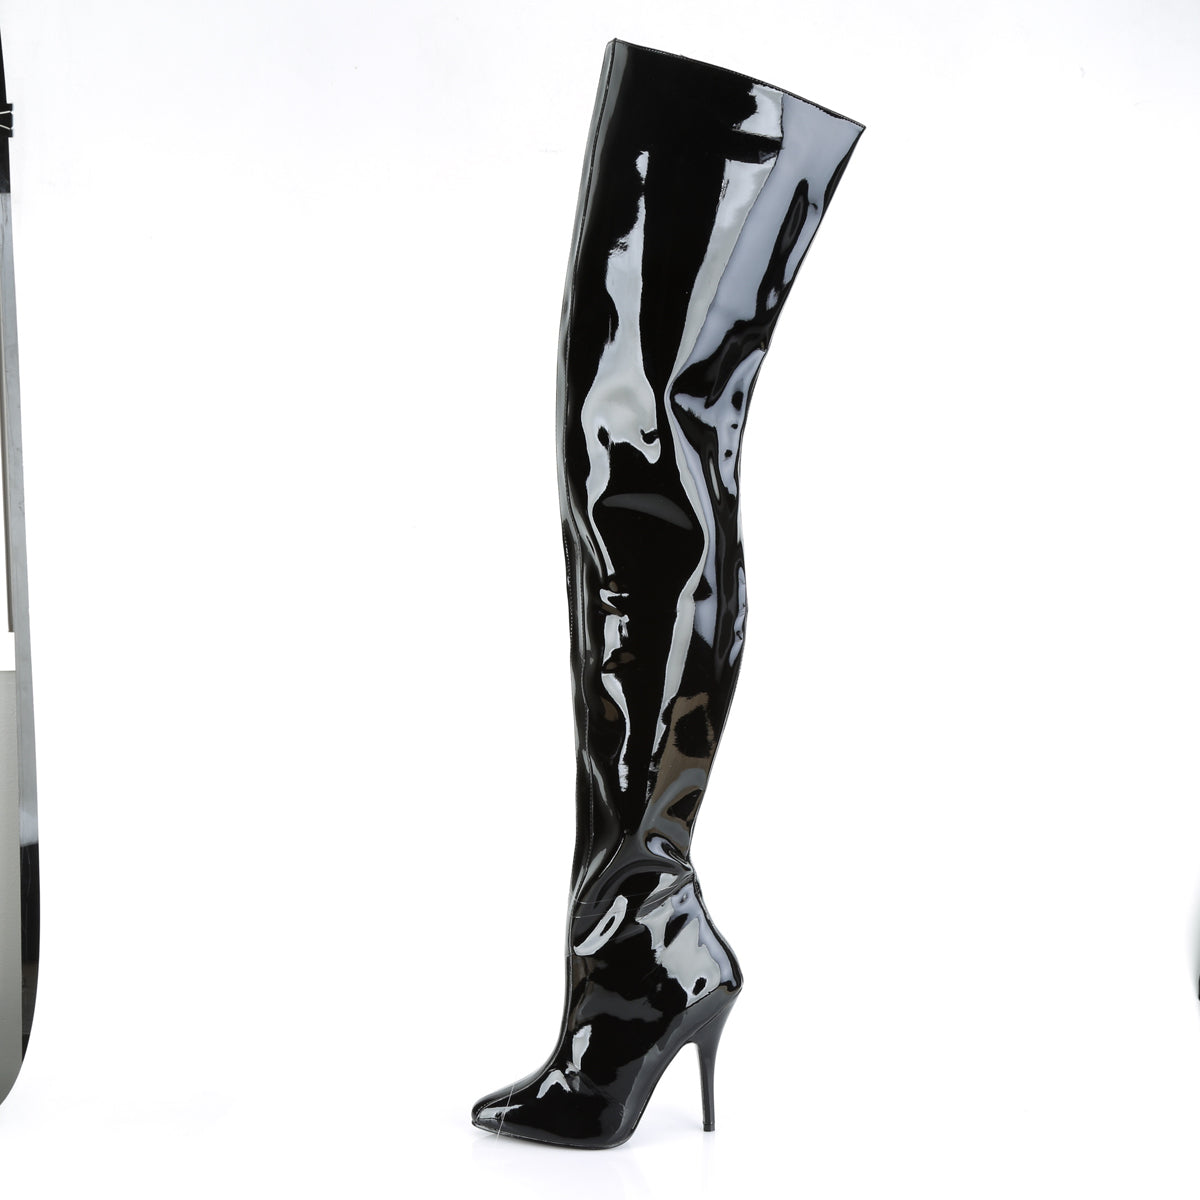 SEDUCE-4010 Chap Boots 5" Heel Black Patent Fetish Footwear-Pleaser- Sexy Shoes Pole Dance Heels